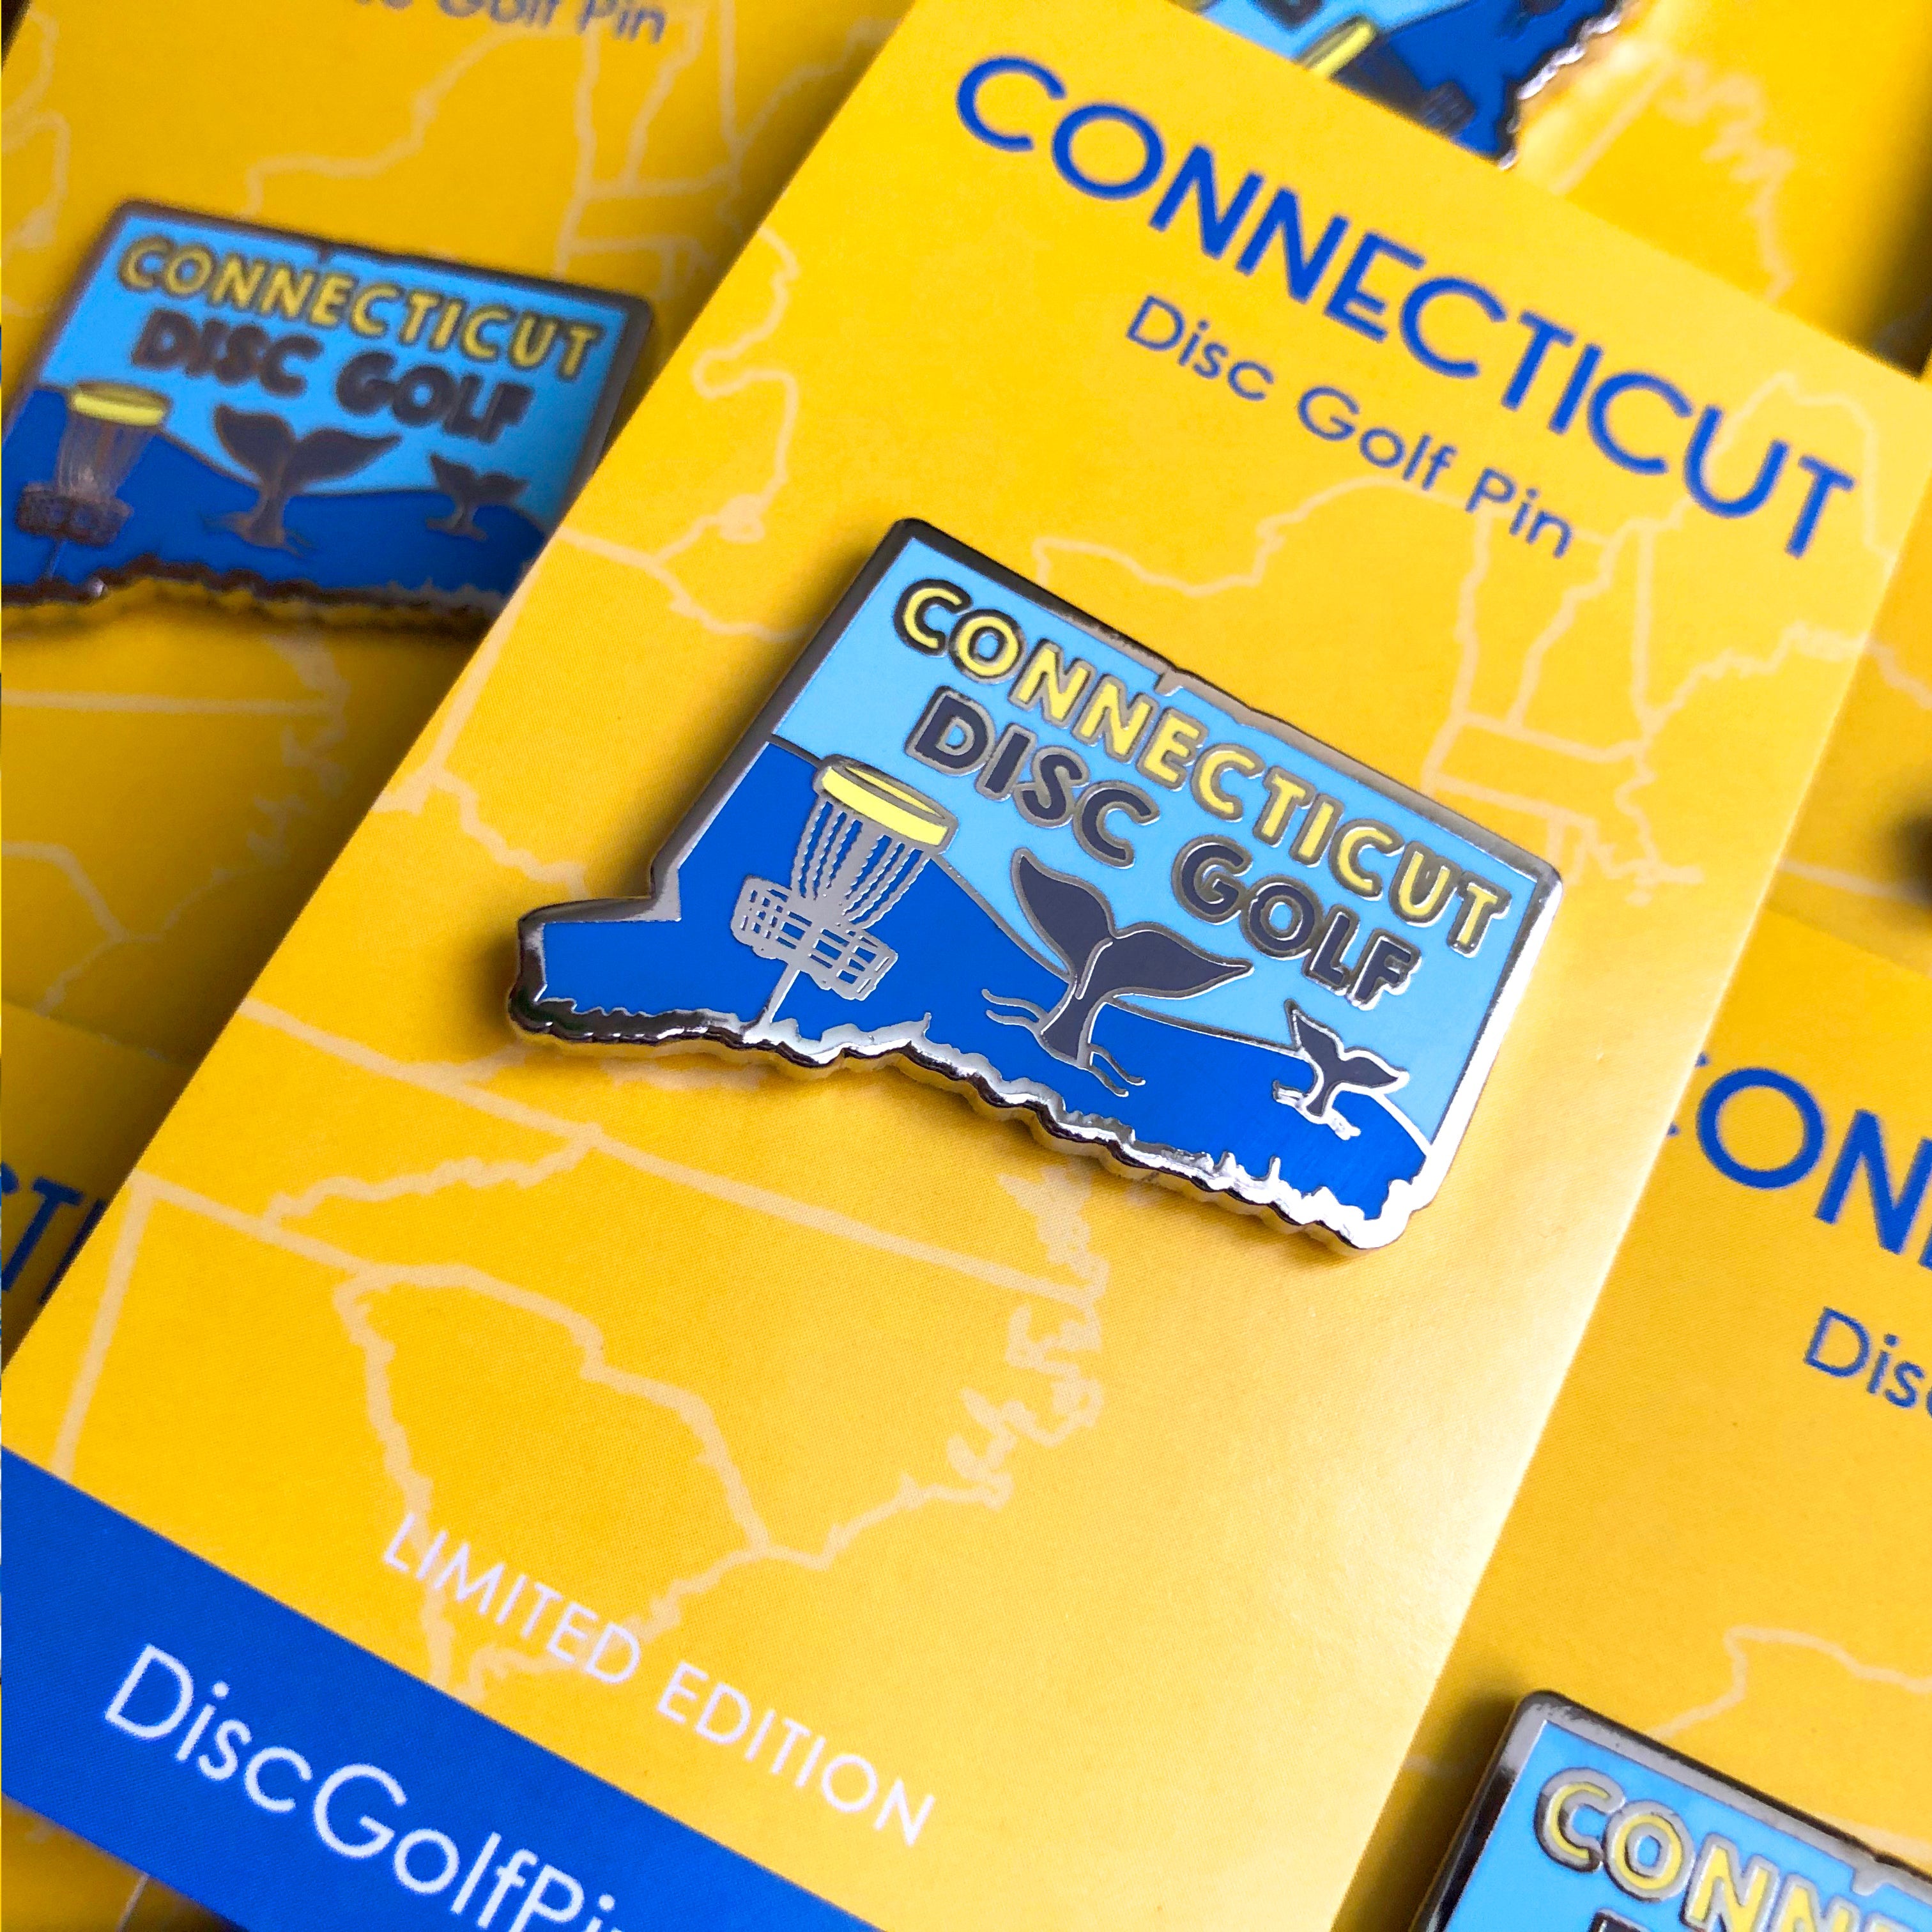 Connecticut Disc Golf Pin